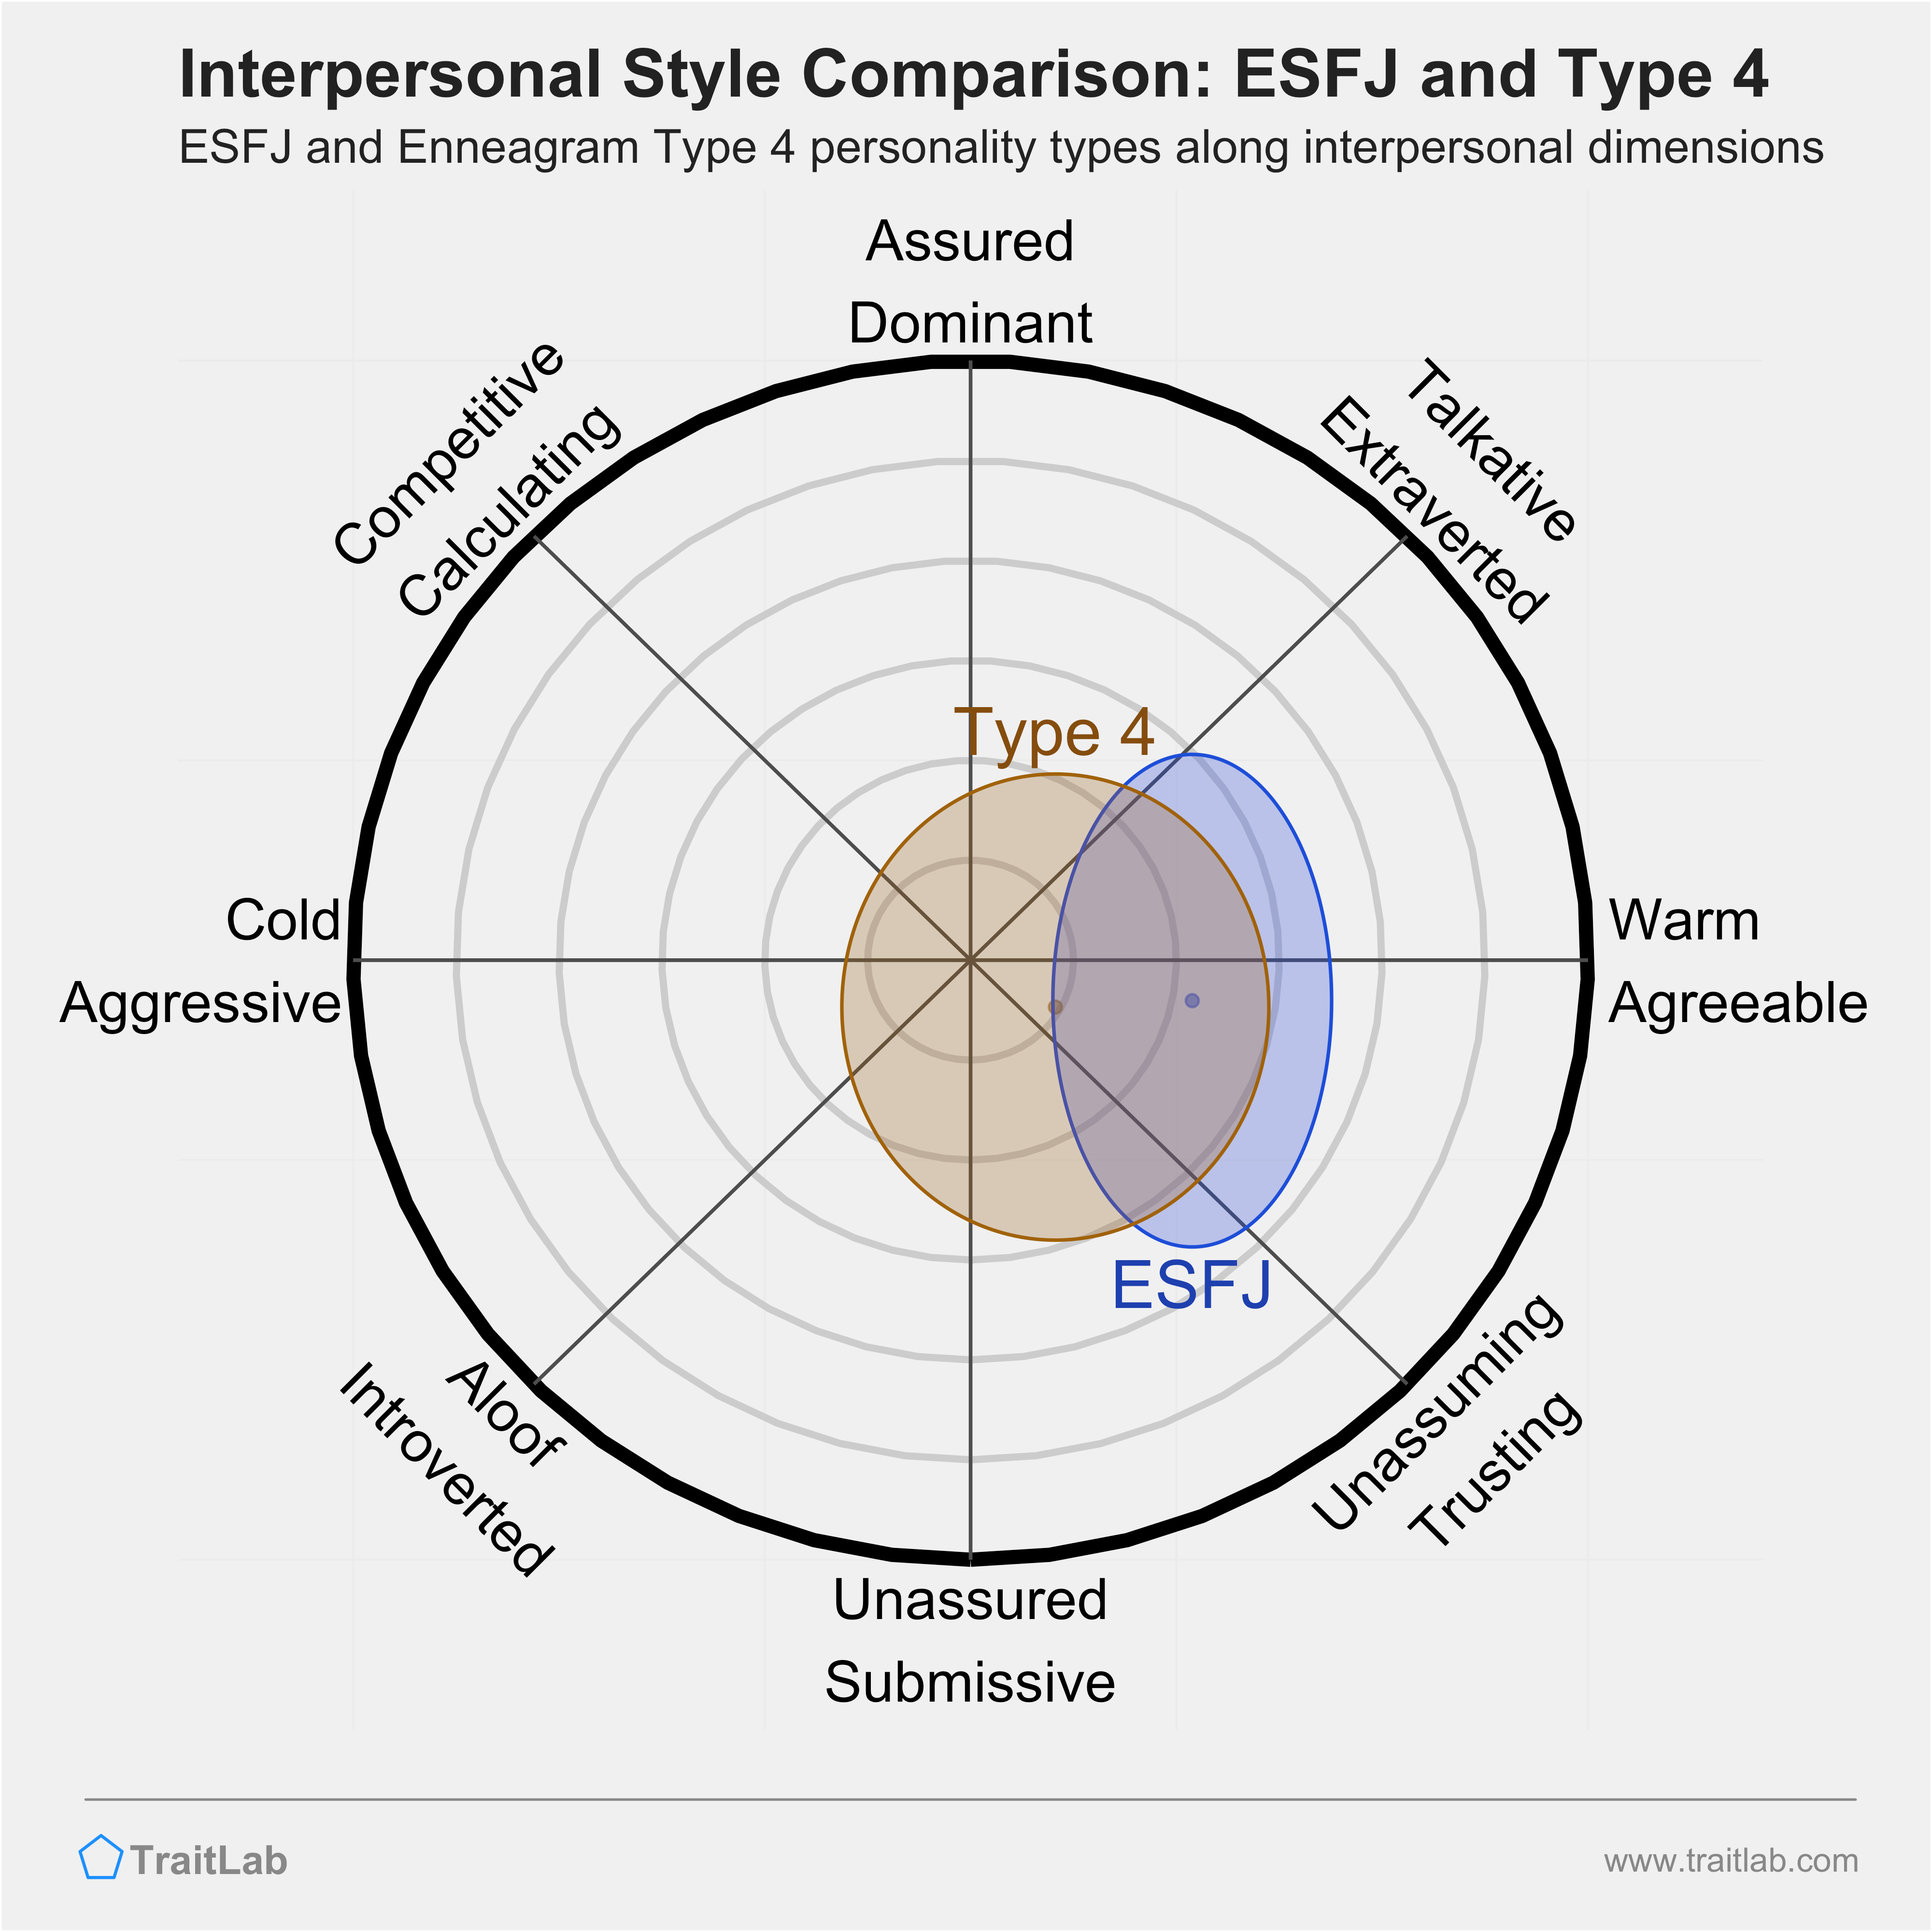 Enneagram ESFJ and Type 4 comparison across interpersonal dimensions